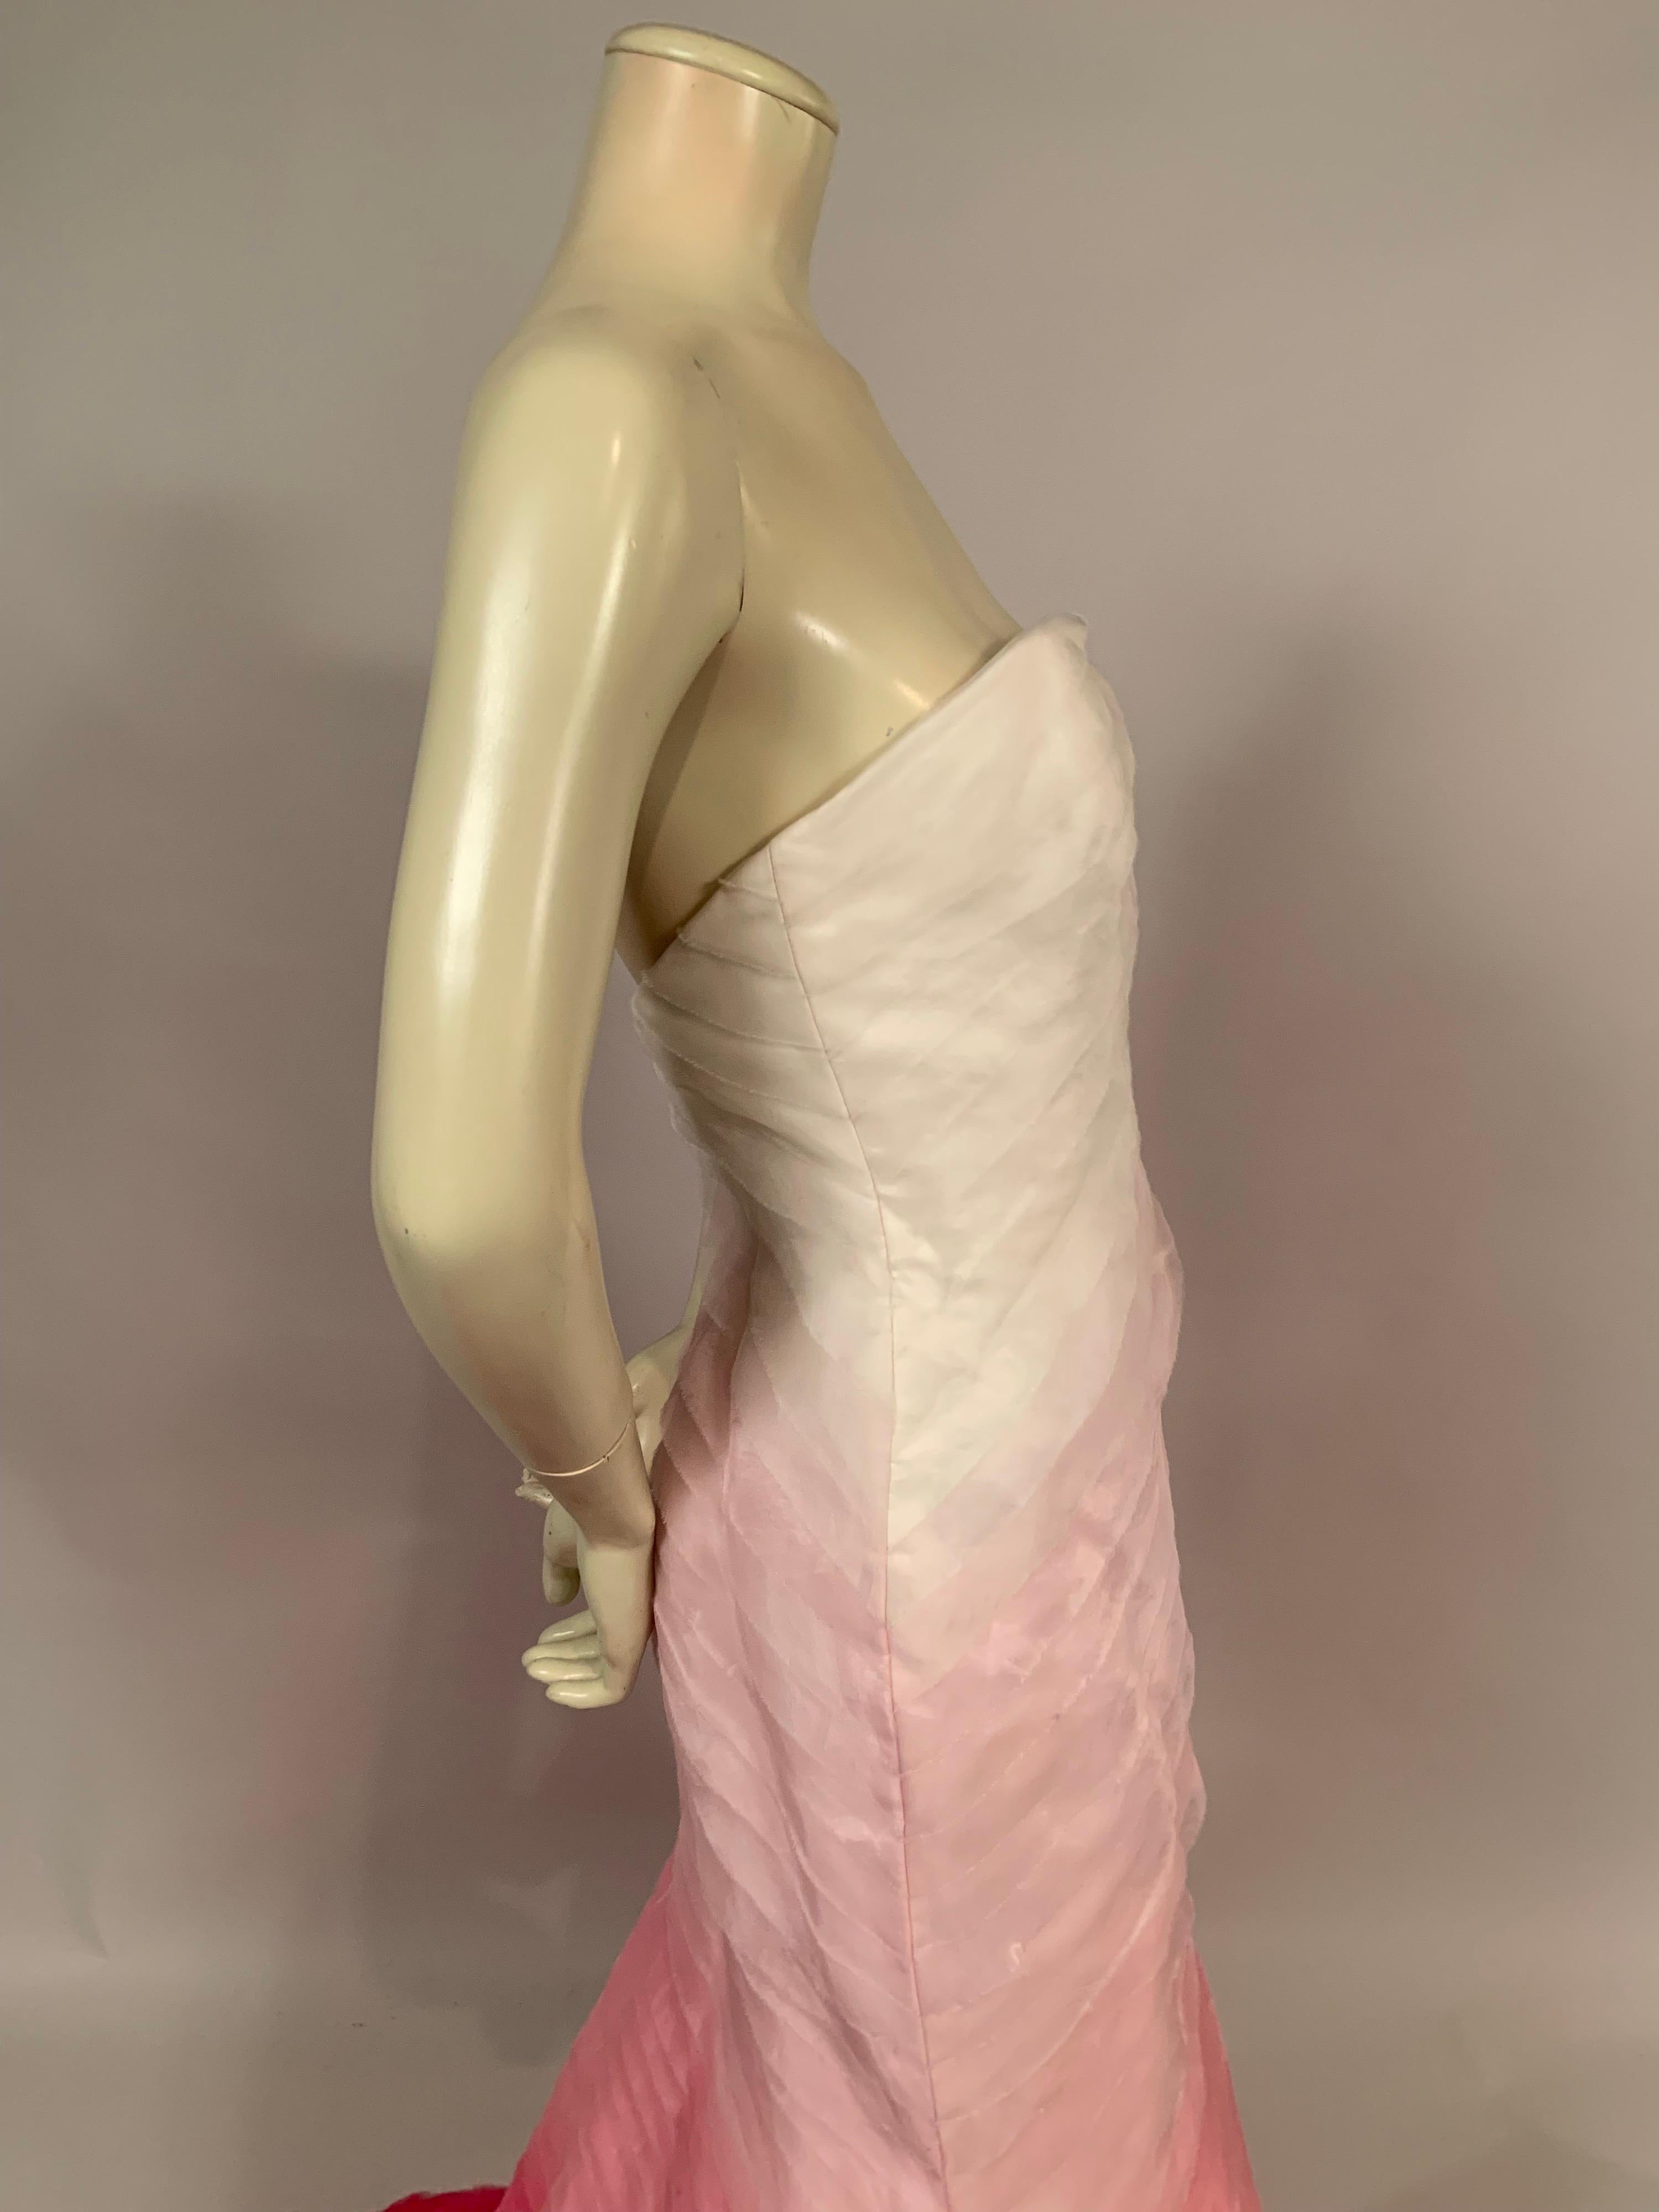 Women's Lilly Pulitzer Silk Organza White to Shocking Pink Evening or Wedding Dress